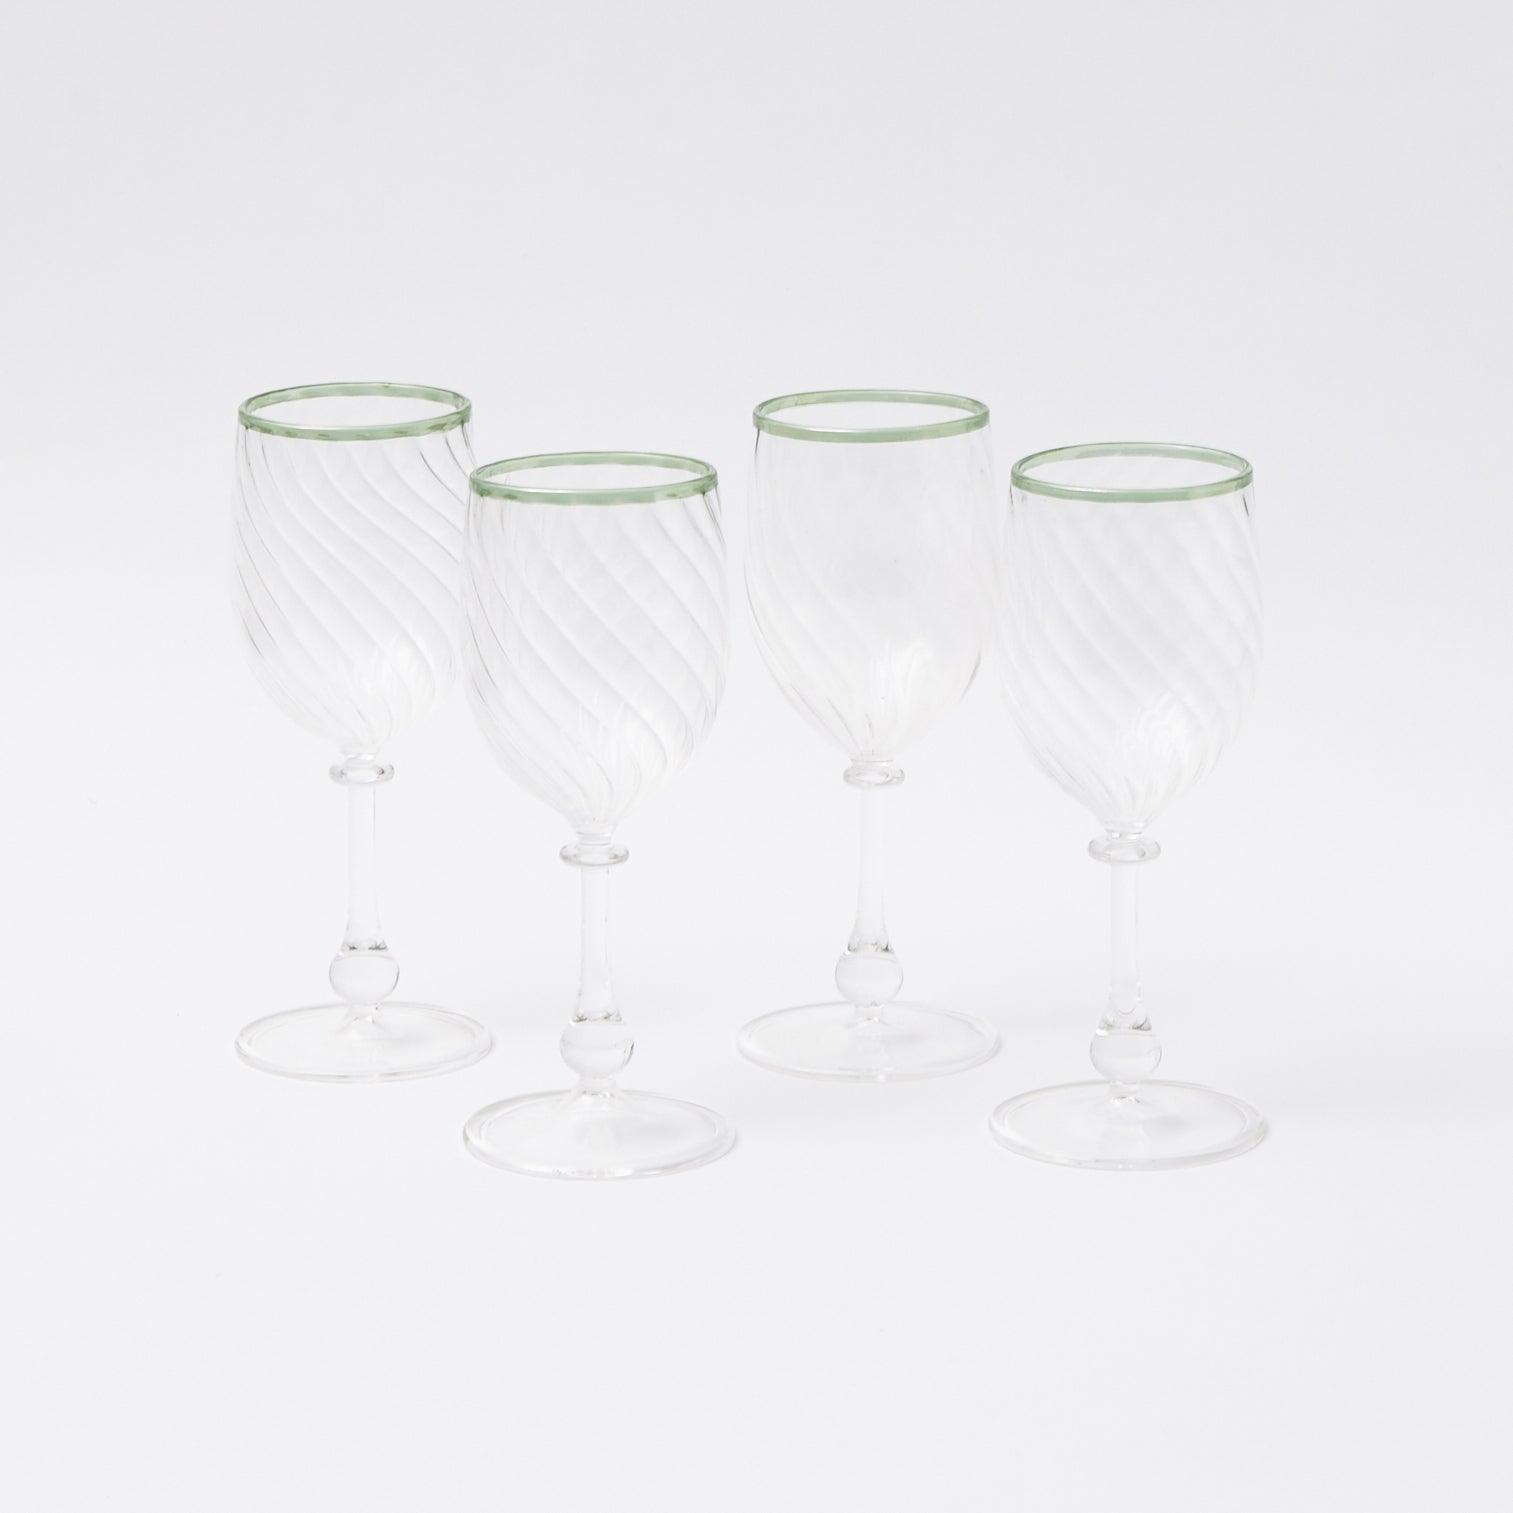 Red Rim Water Glasses (Set of 4) – Mrs. Alice